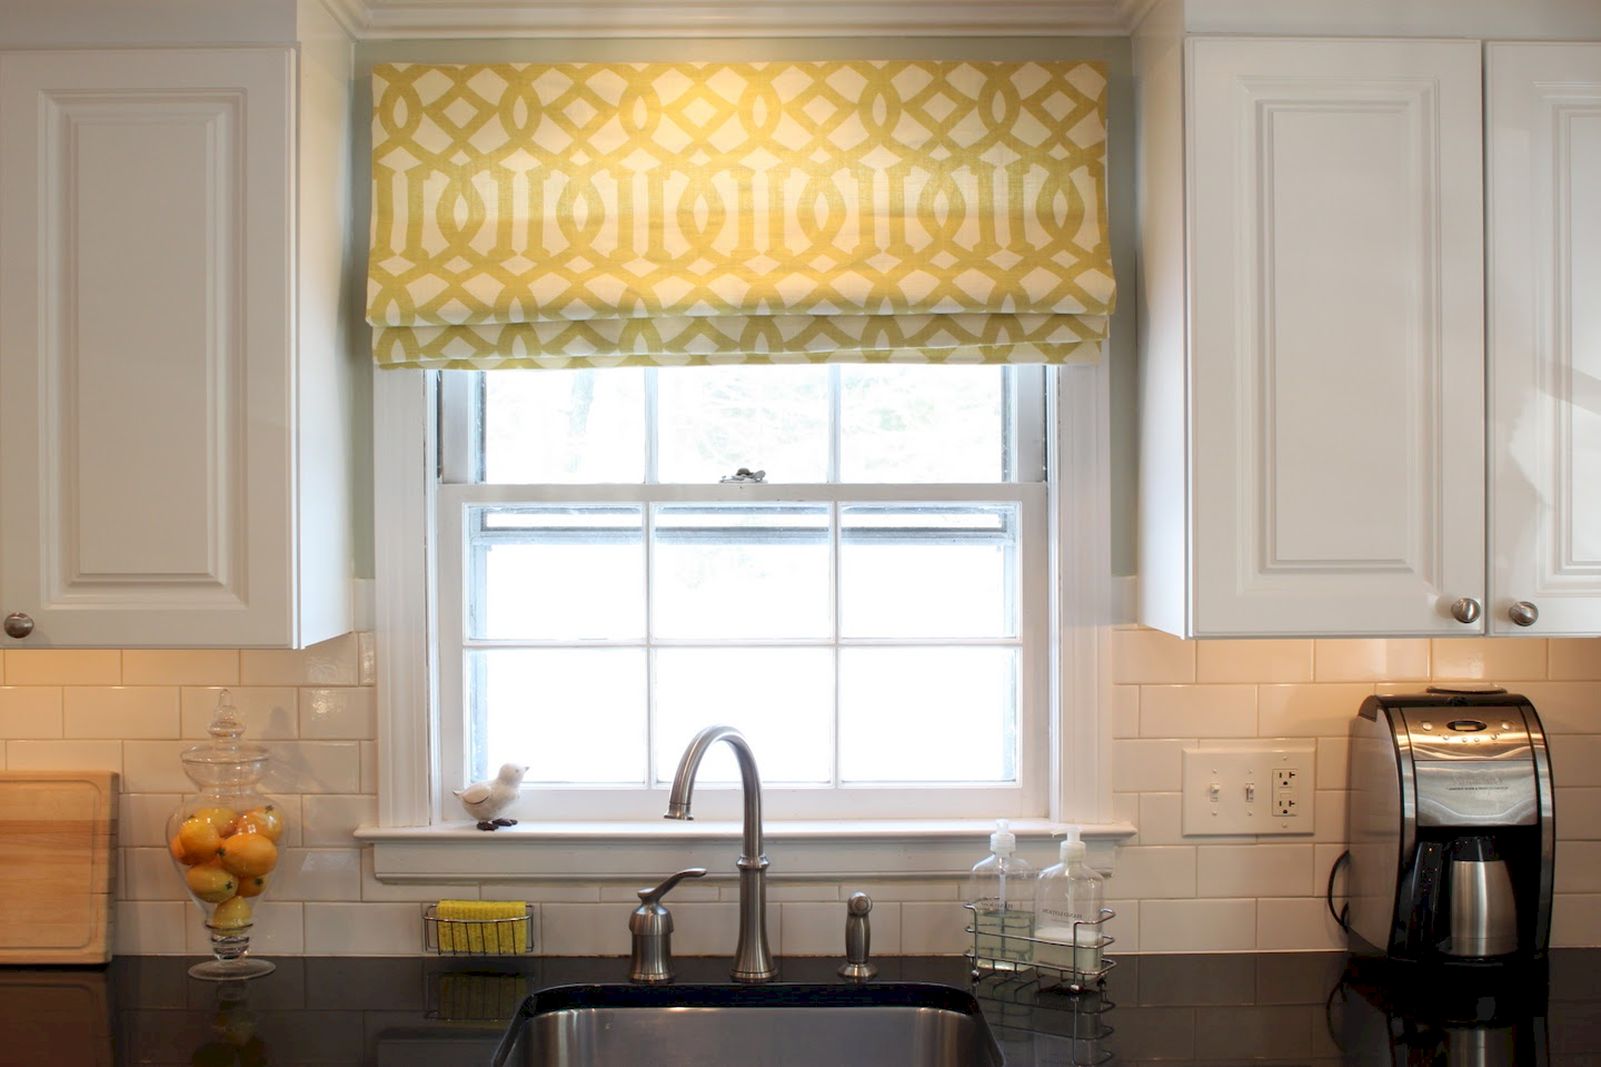 Kitchen Windows Curtains photo - 1